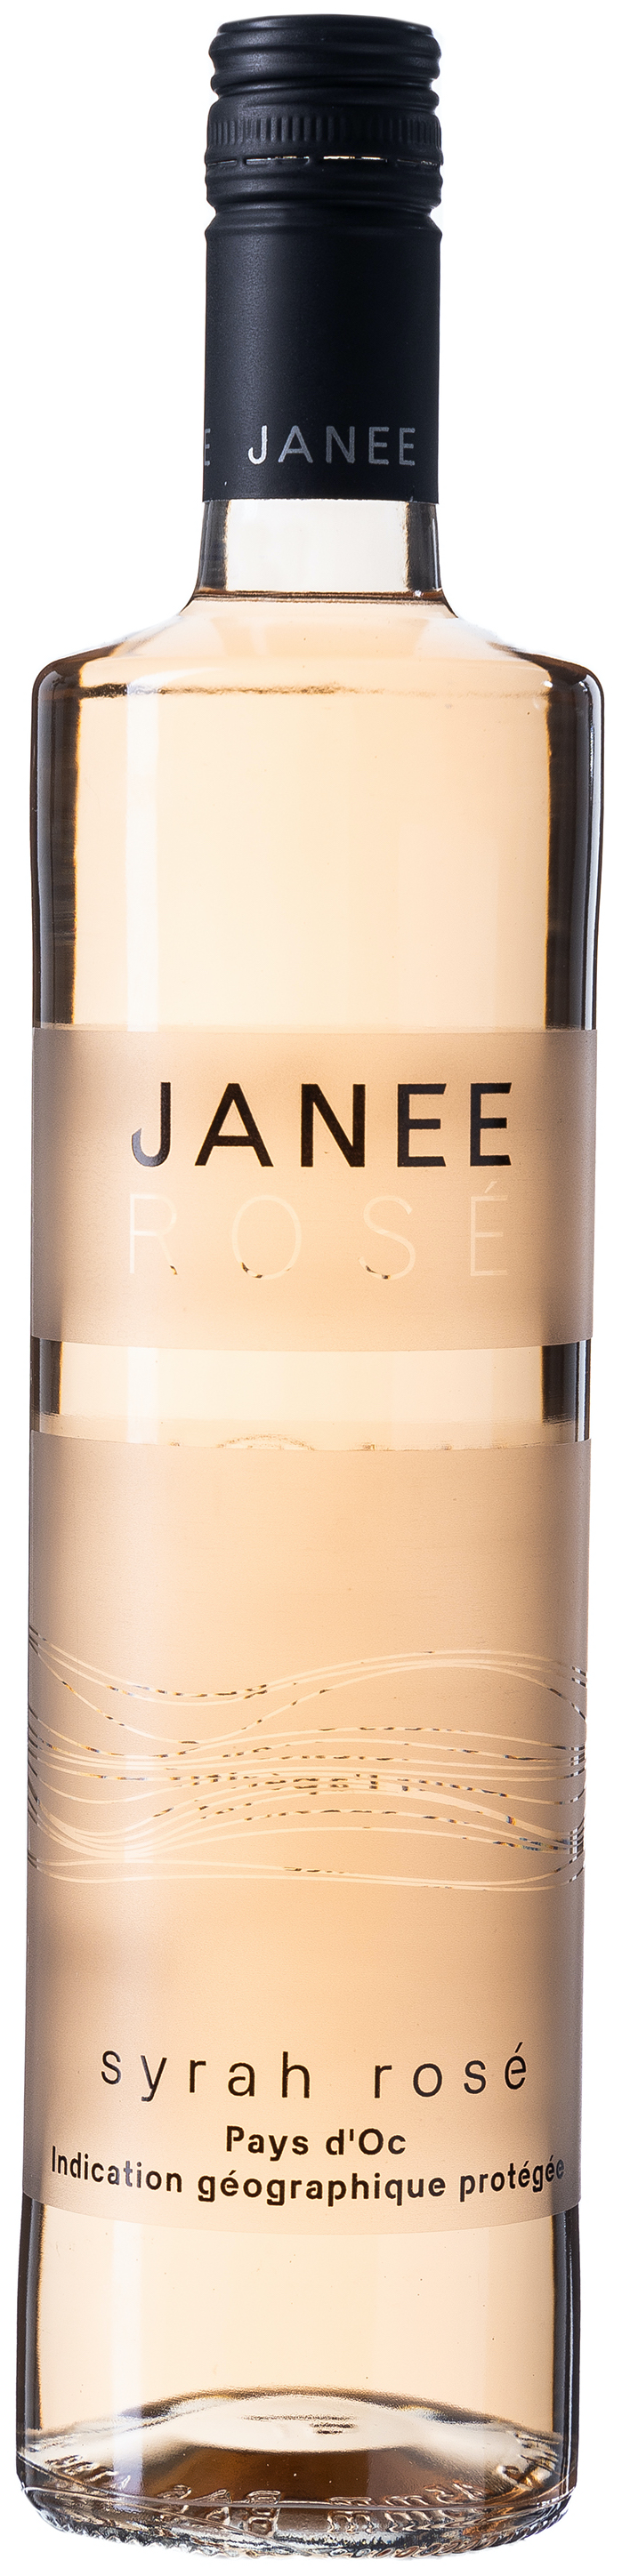 Janee Syrah rosé feinherb 11,5% vol. 0,75L